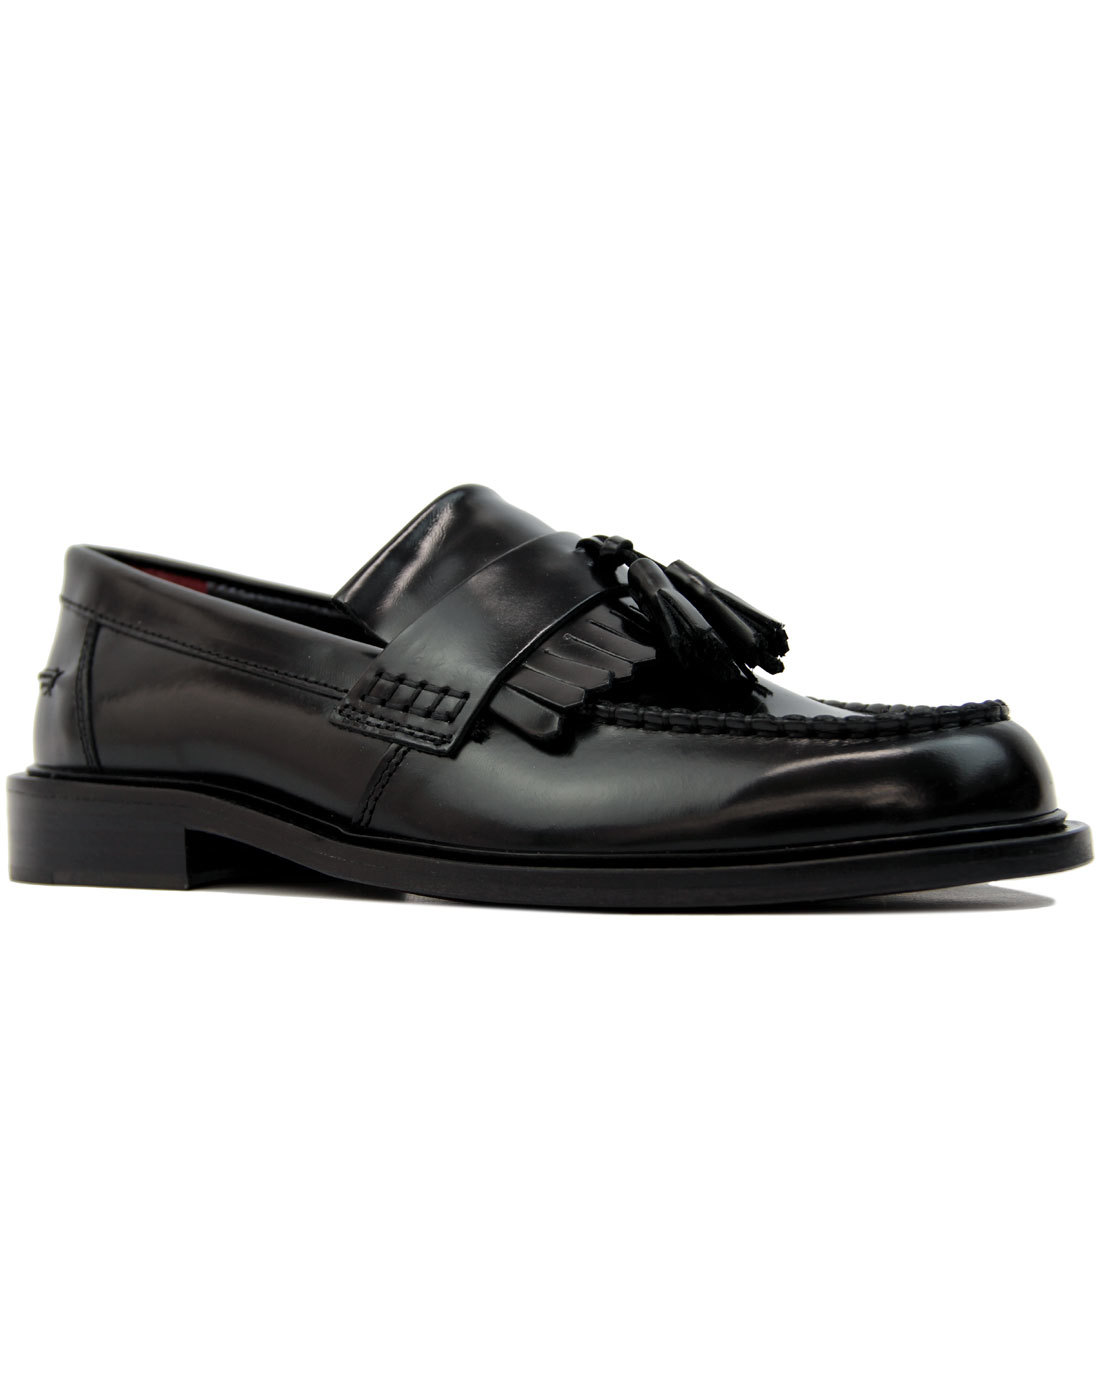 Retro Mod Black Tassel Loafers Shoes